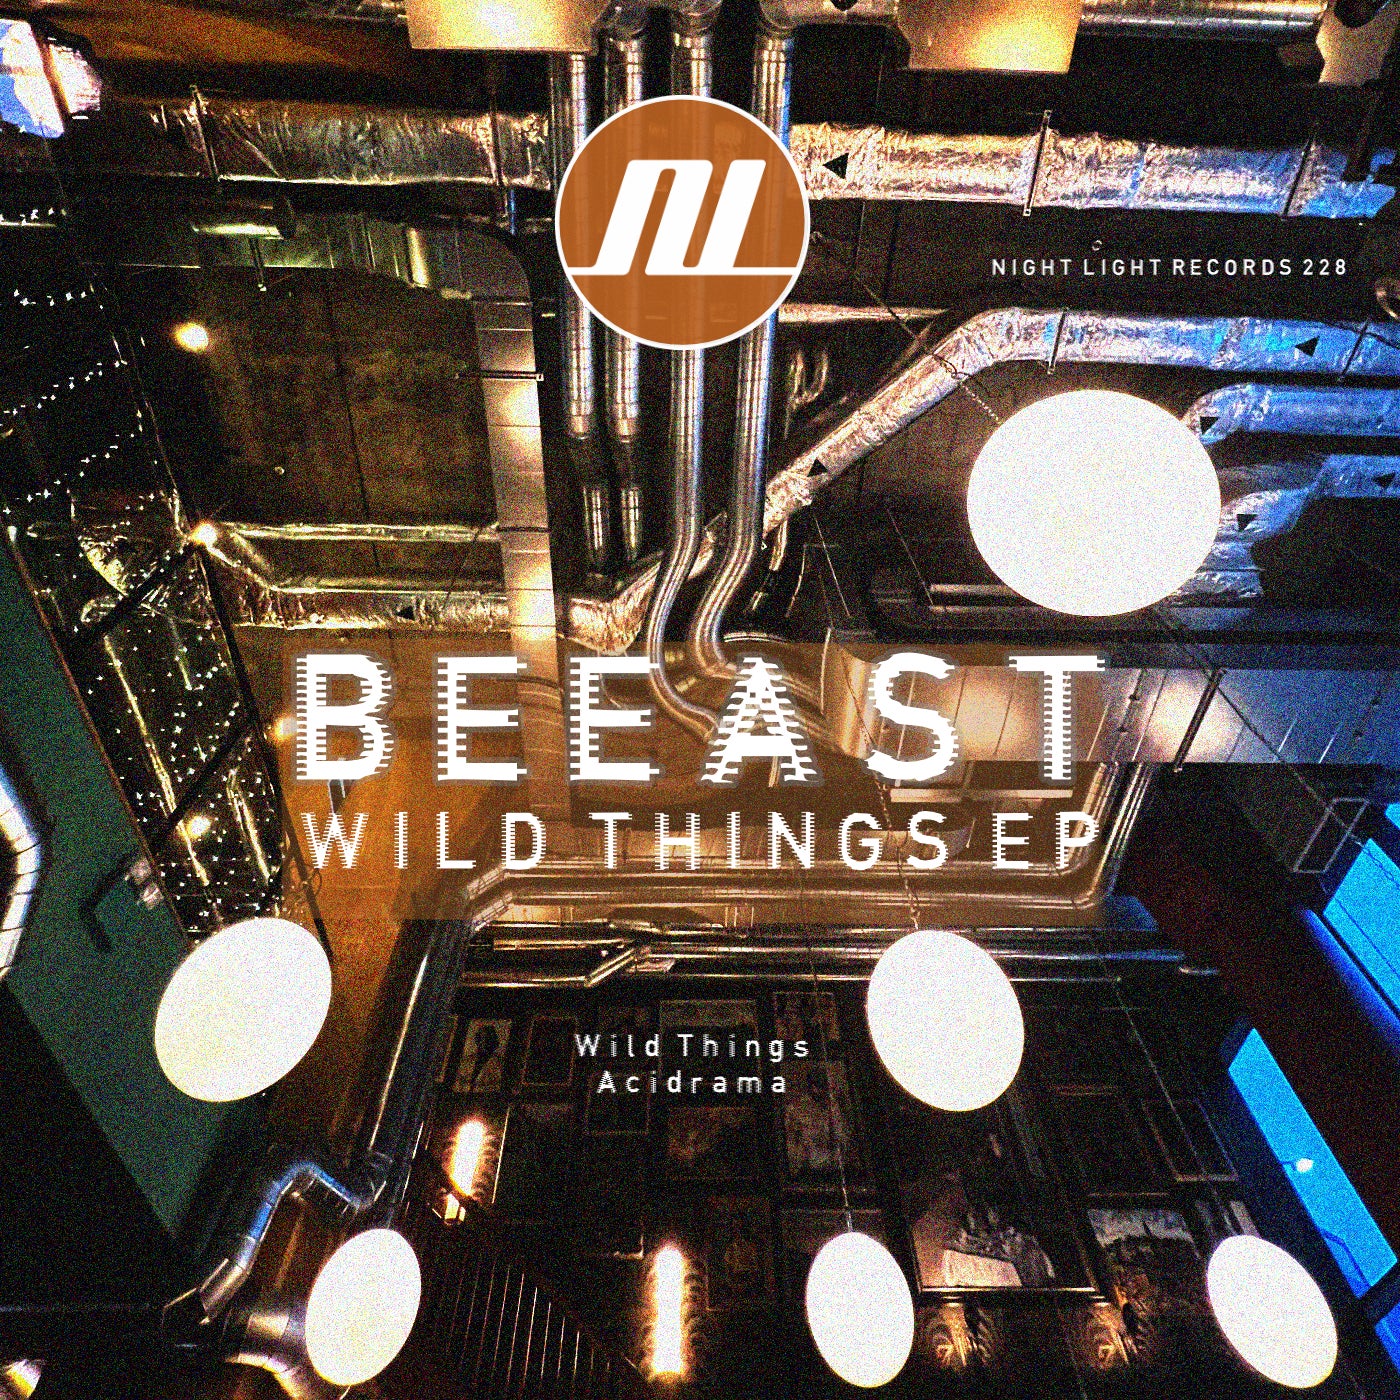 Cover - BEEAST - Wild Things (Original Mix)